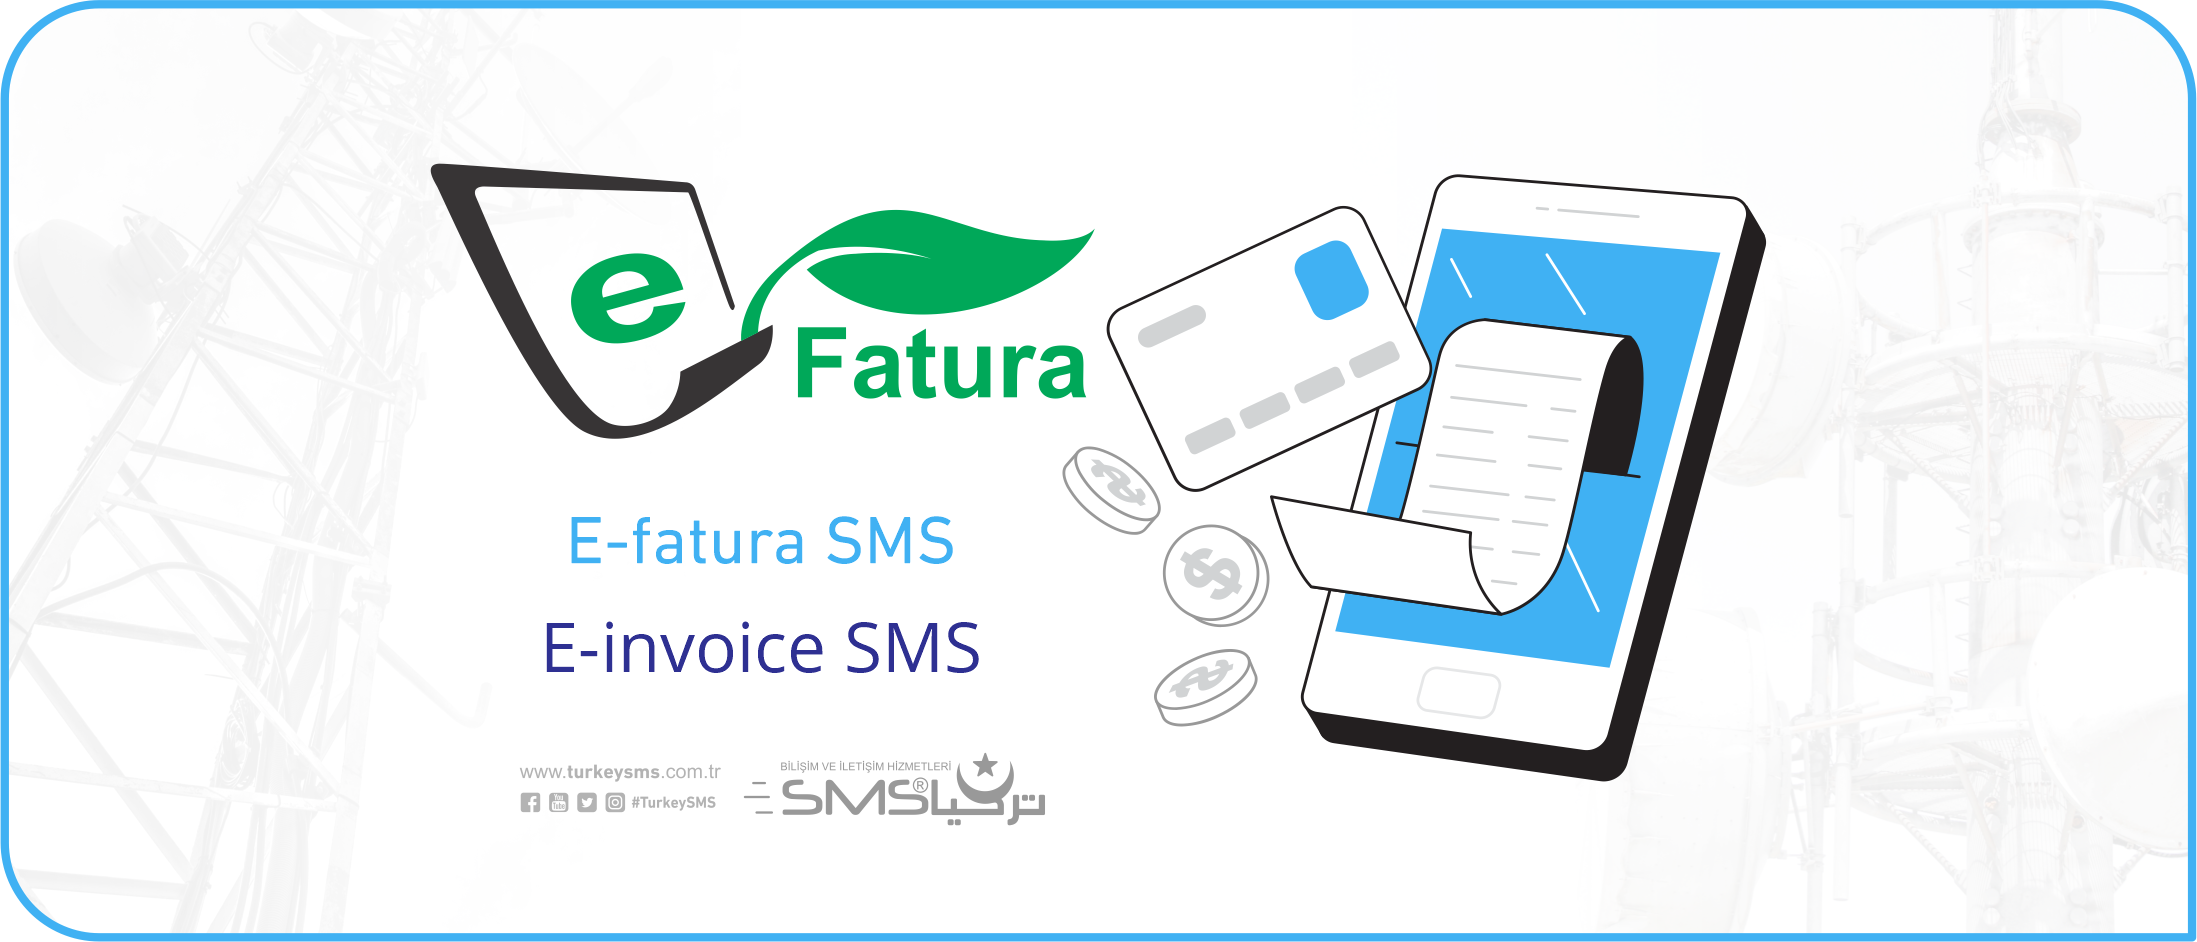 E-fatura E-invoice SMS